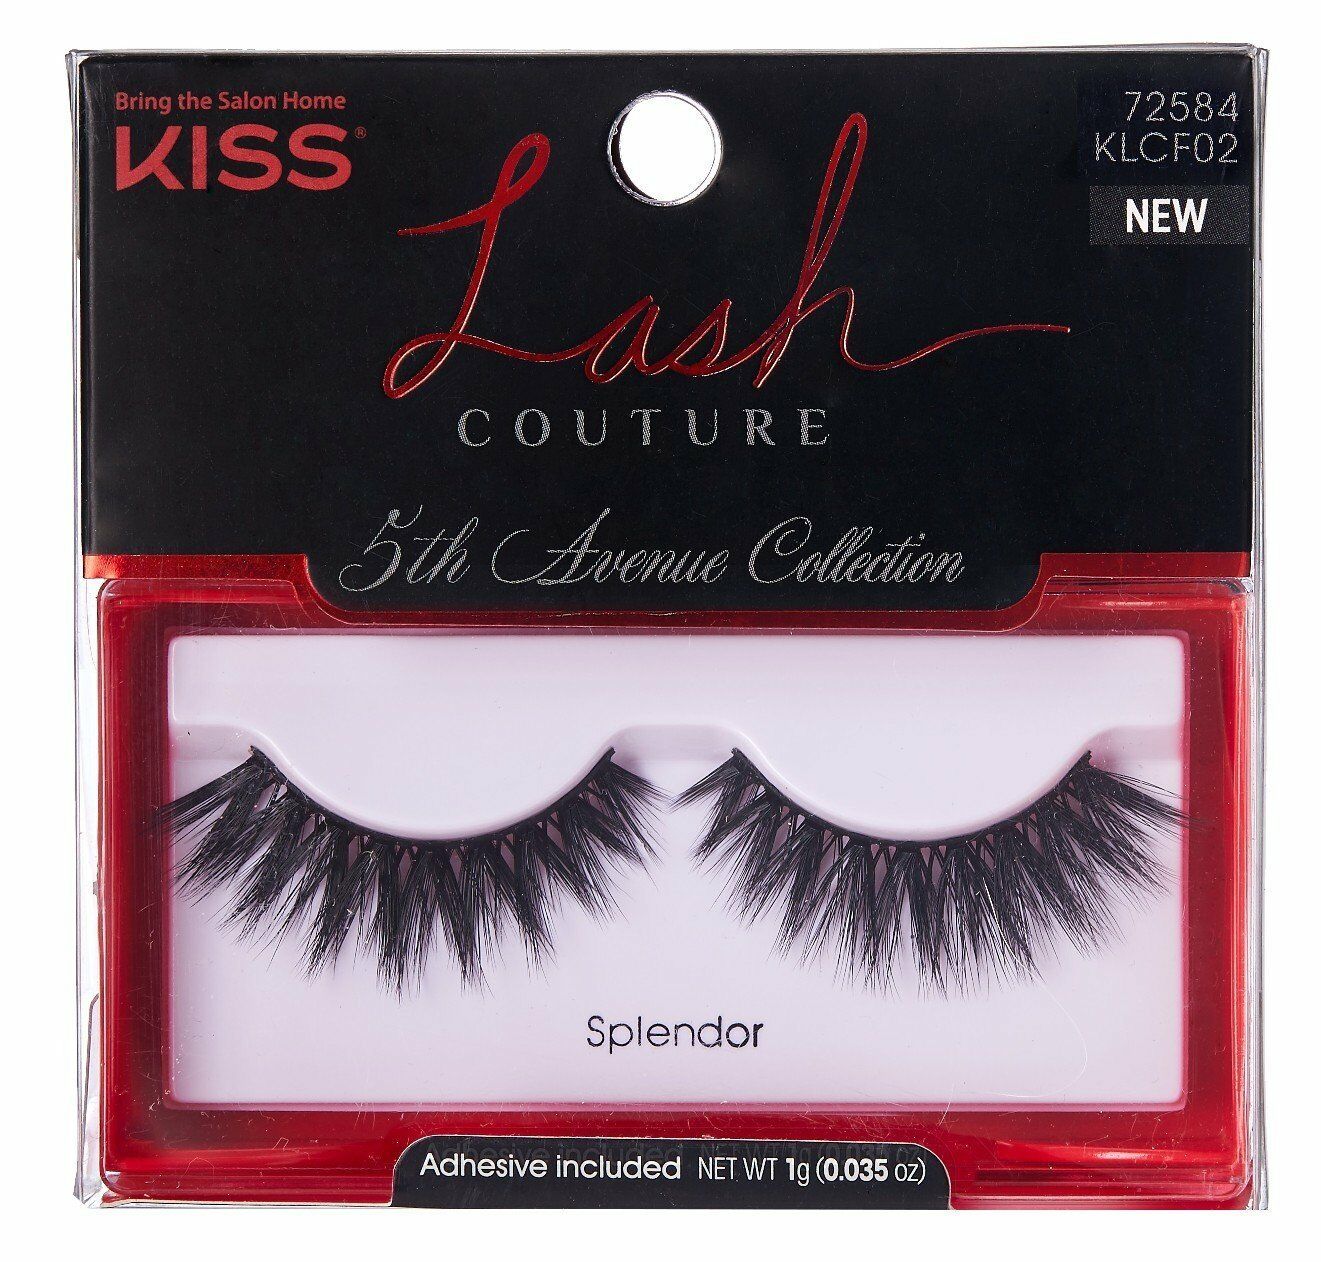 Kiss Lash Couture 5th Avenue Collection SPLENDOR Eyelashes (KLCF02)